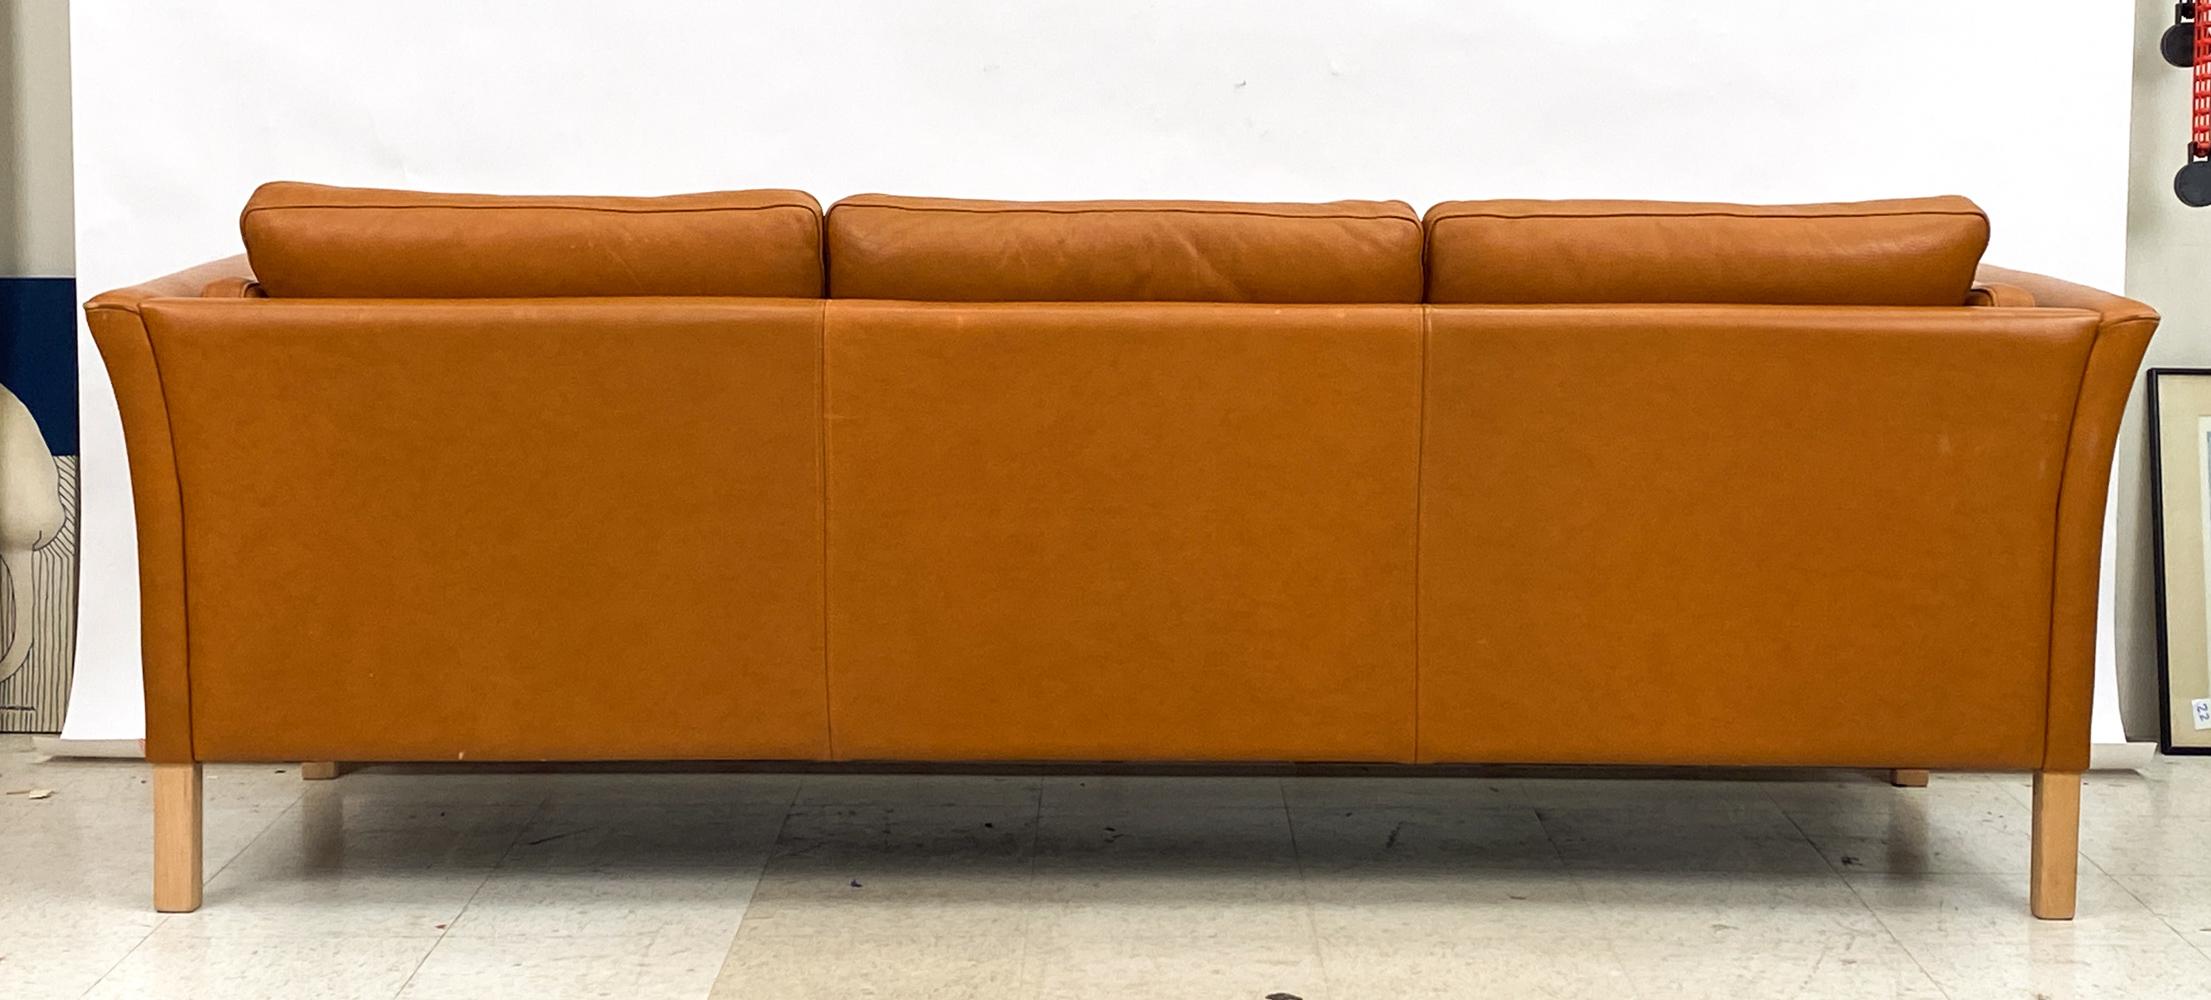 Mogens Hansen Danish Modern Caramel Leather Three-Seater Sofa For Sale 7